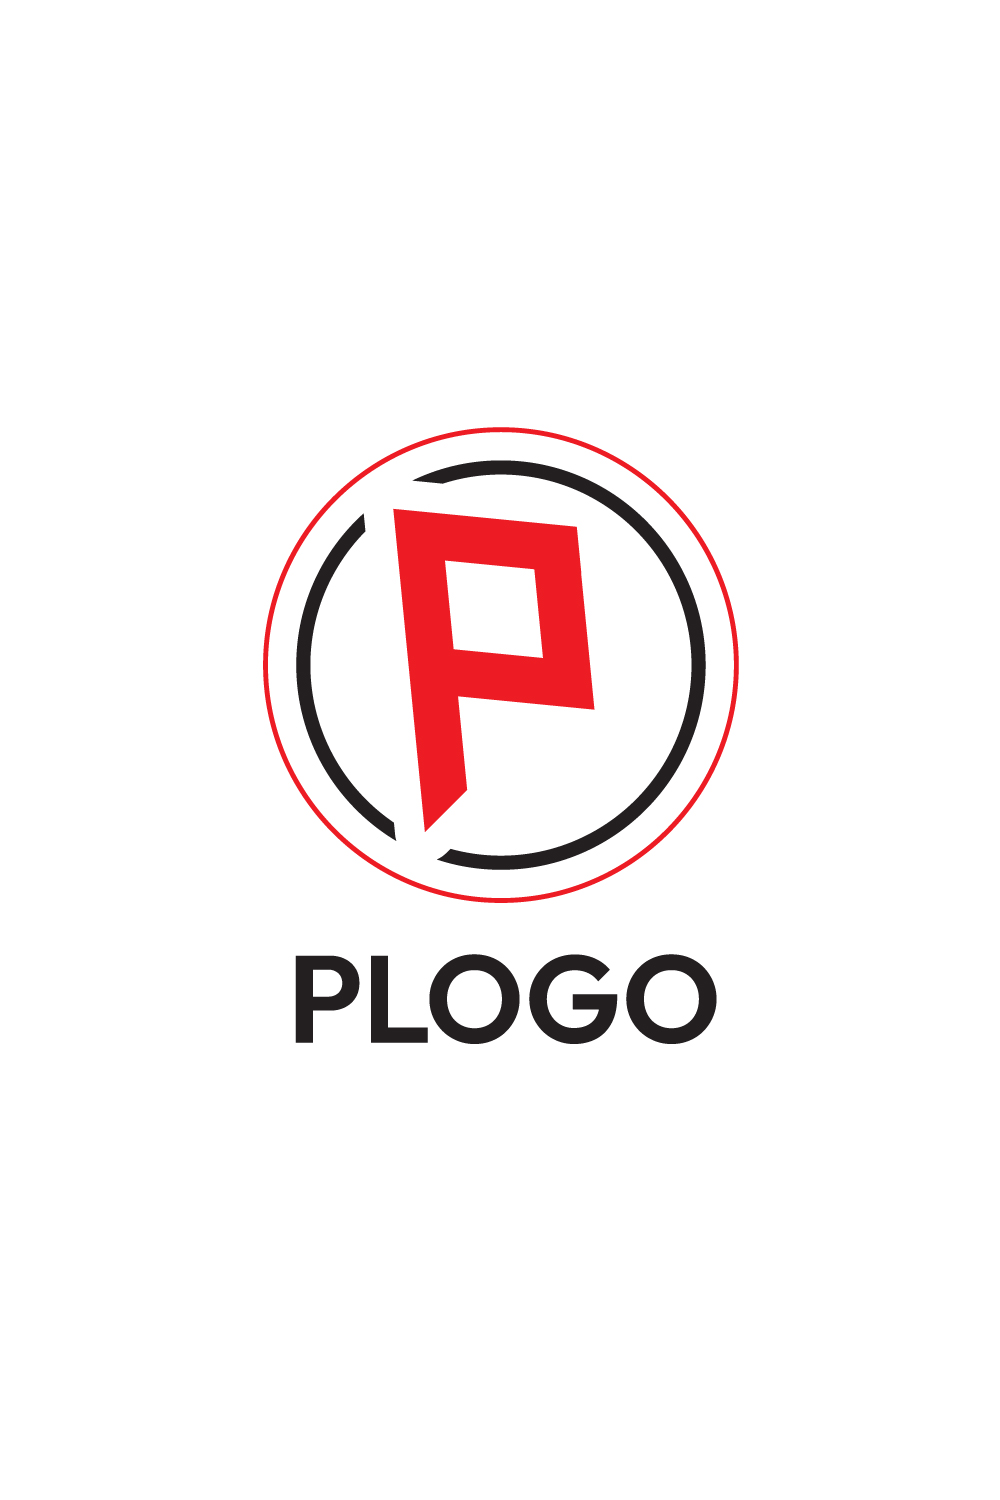 Premium P Logo Design Bundle: Elevate Your Brand Identity! pinterest preview image.